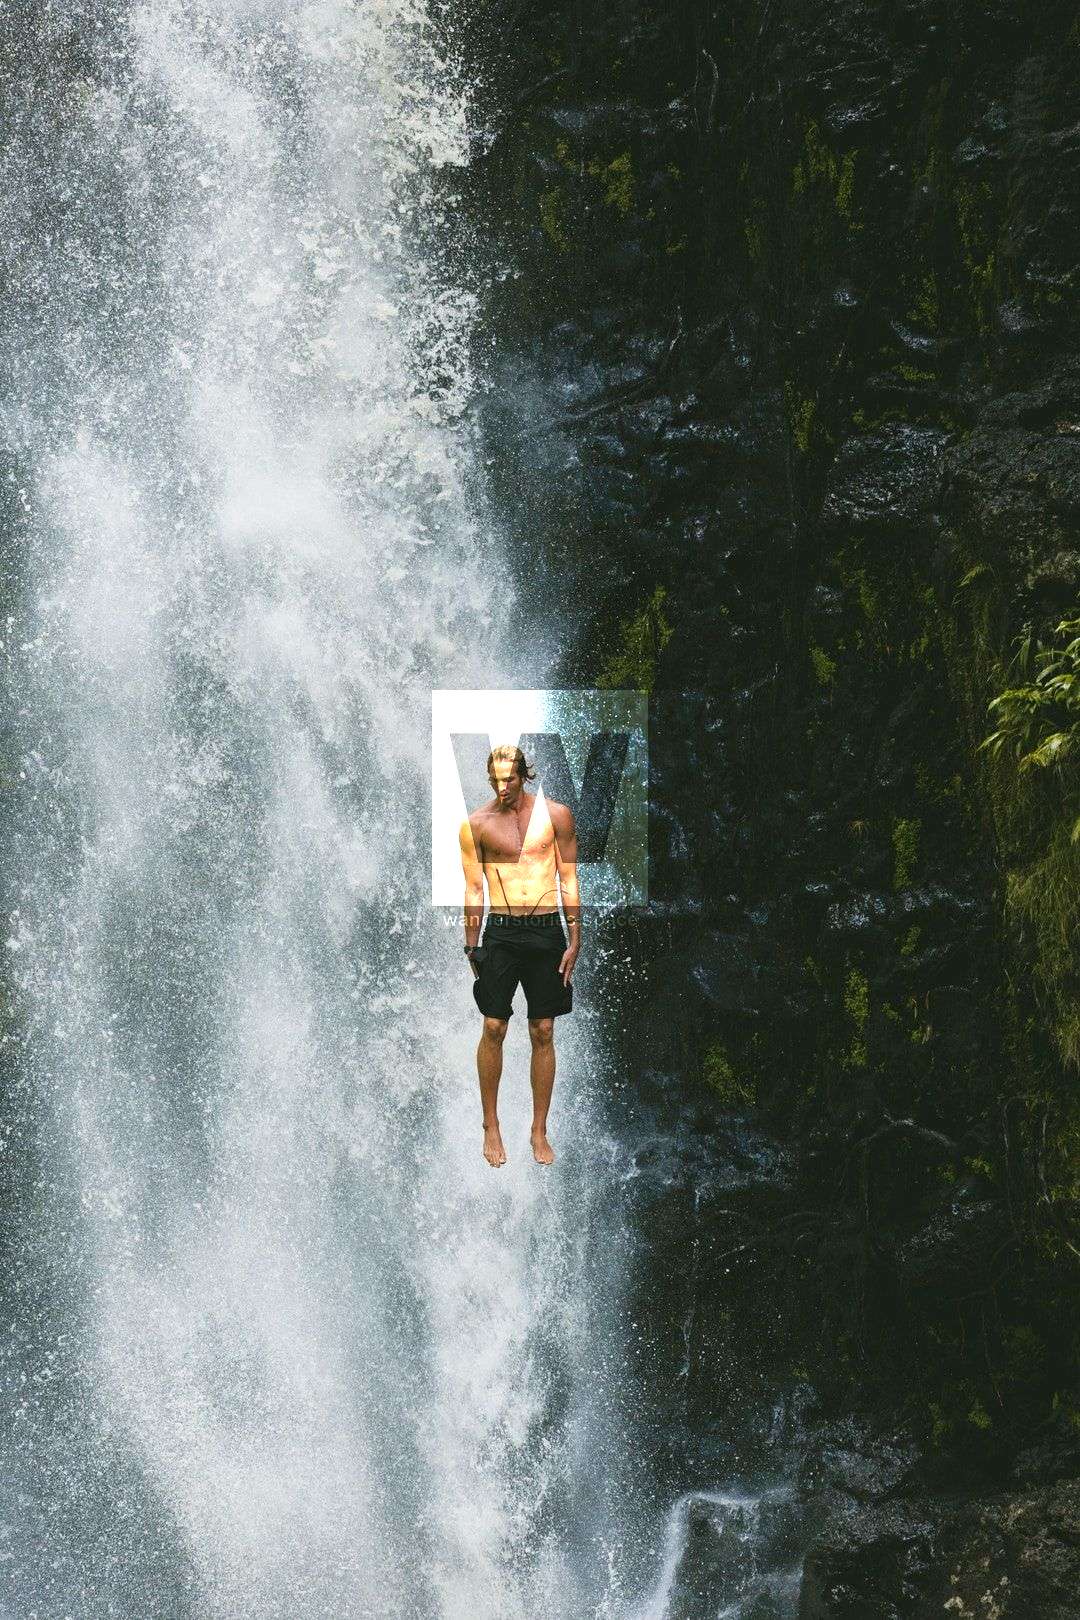 waterfall cliff jump